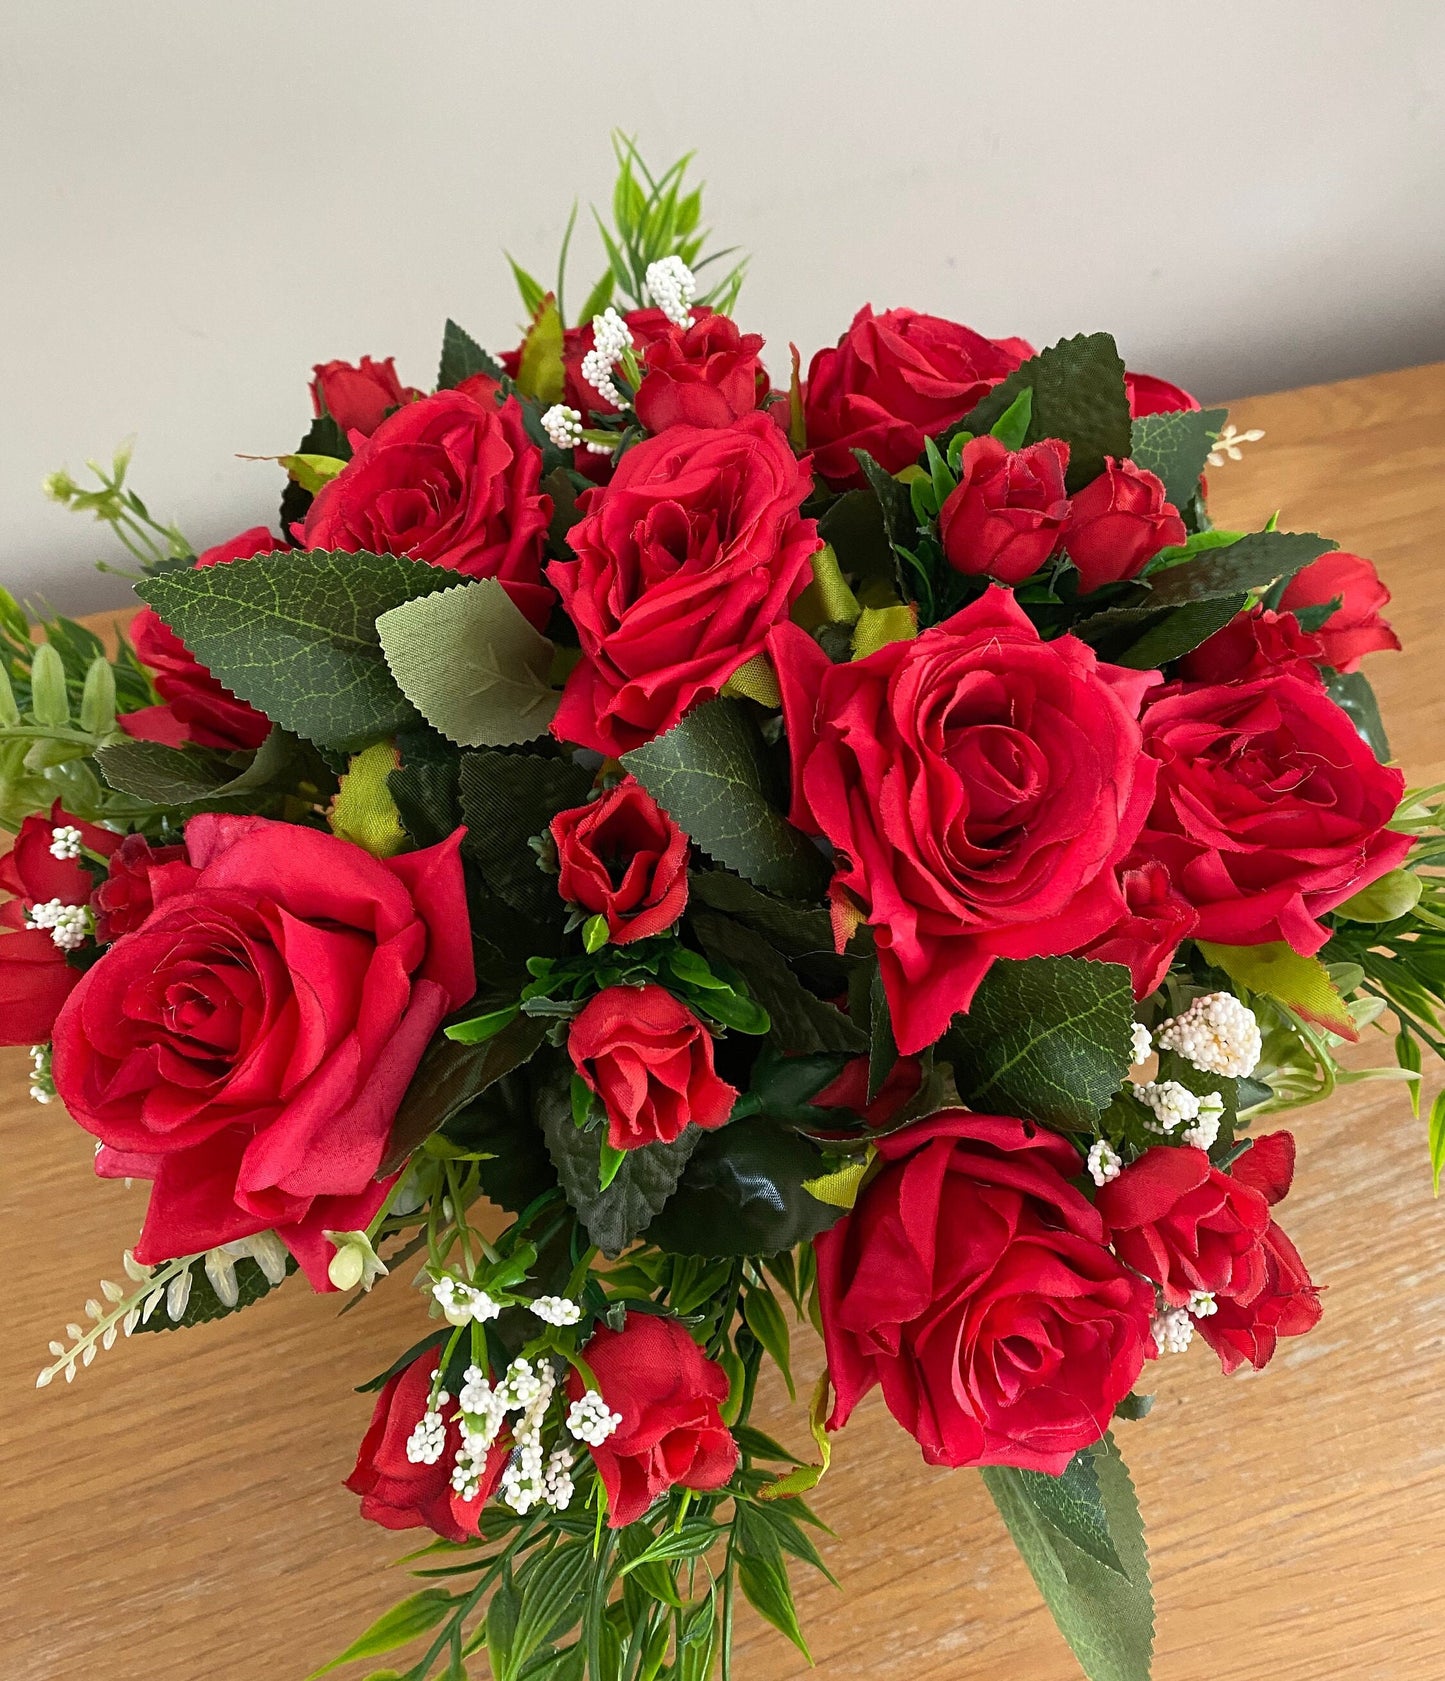 Artificial Flower Graveside Flower Arrangement in Luxury Red Roses